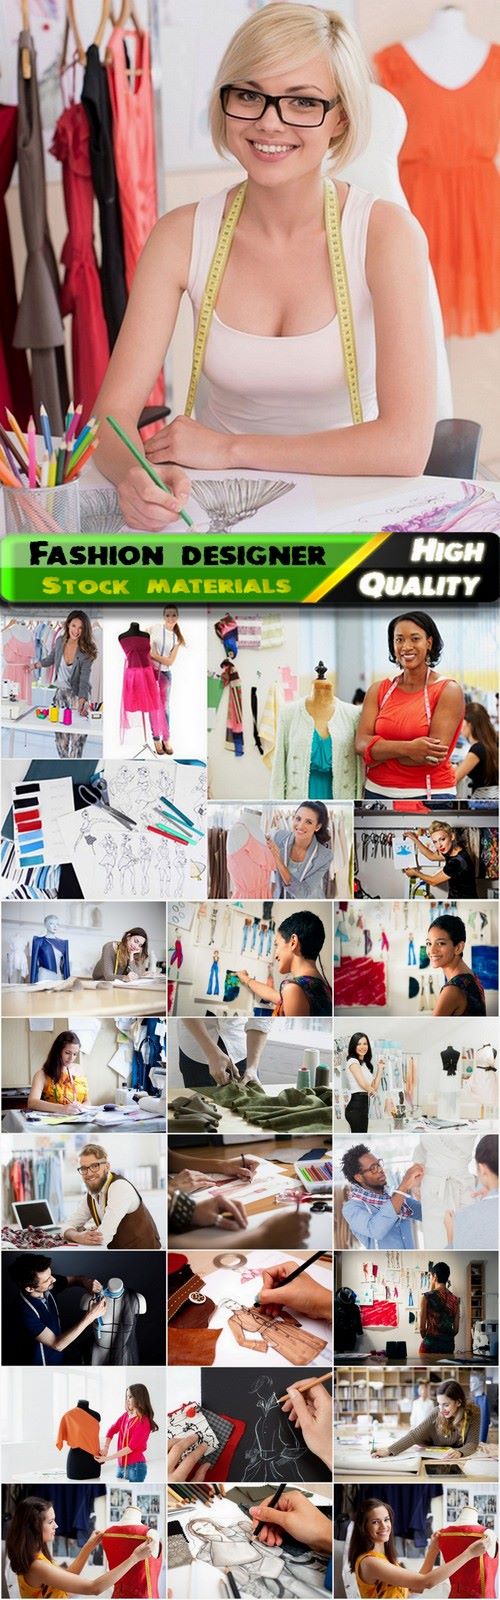 Fashion designer create tailor clothes - 25 HQ Jpg